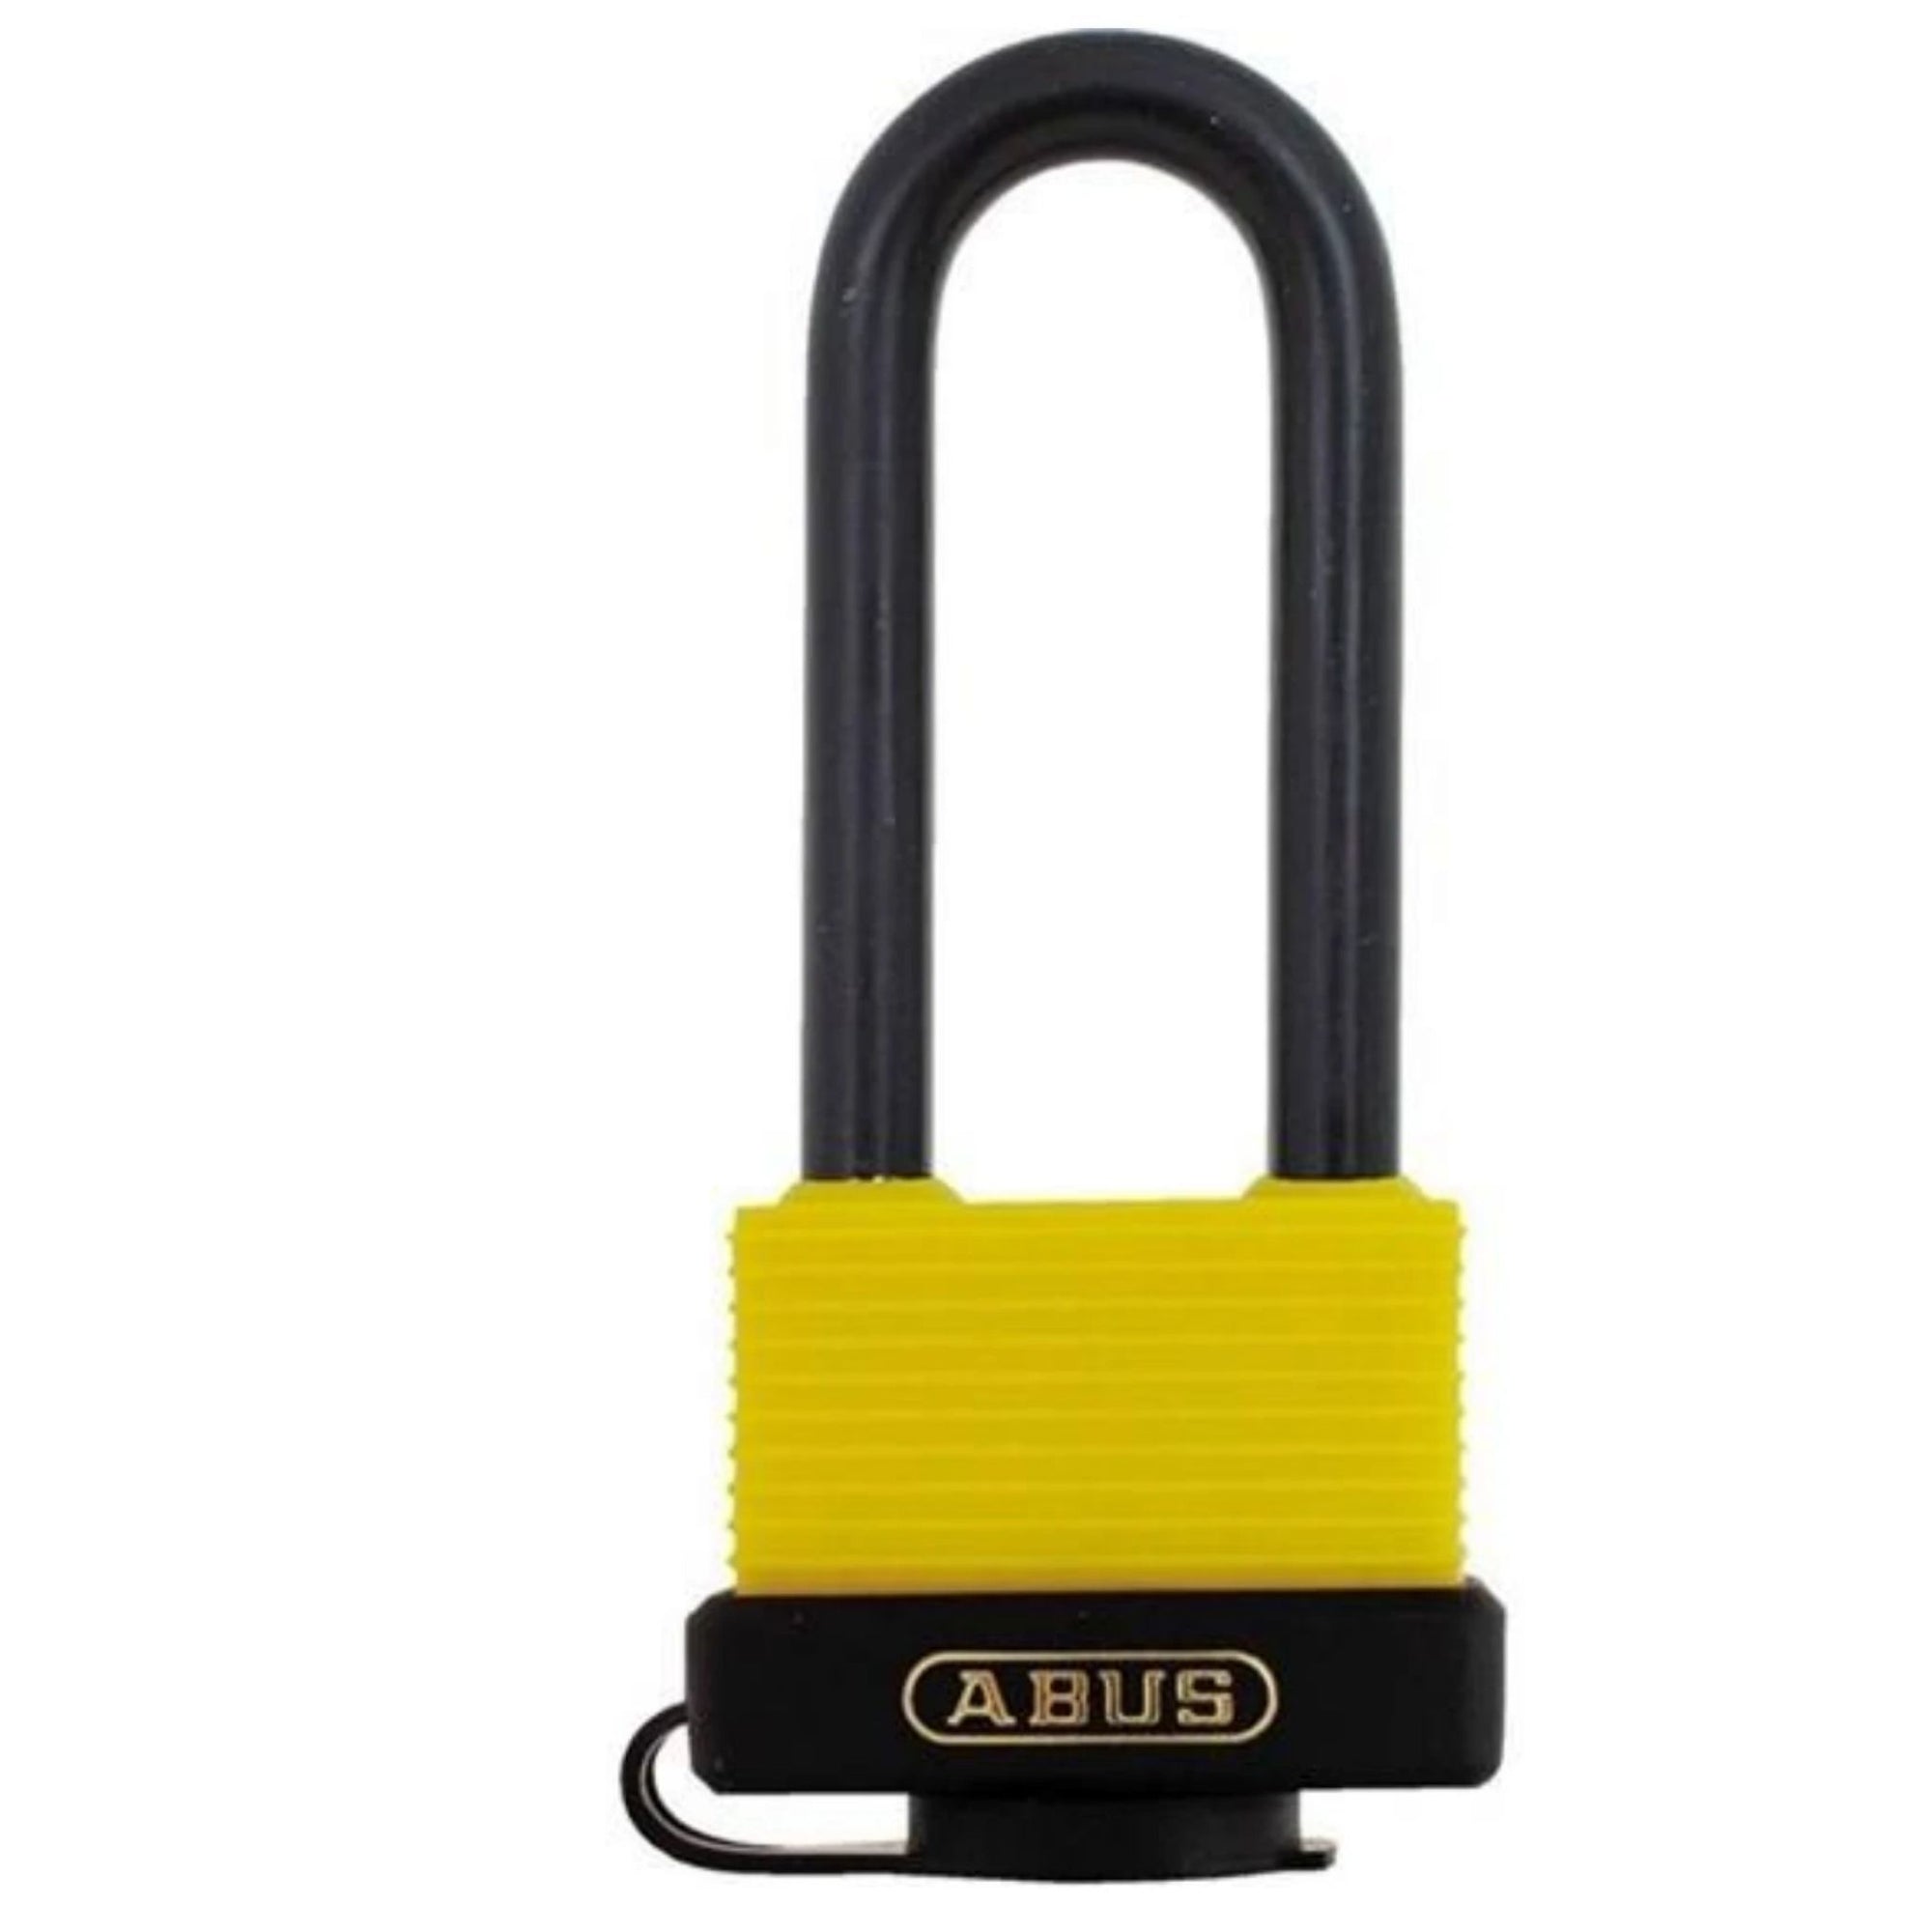 Abus 70/45HB63 KA 6403 Lock Keyed Alike Weatherproof Brass Padlocks with 2.5-Inch Shackle Keyed Alike to Match Key Number KA6403 - The Lock Source